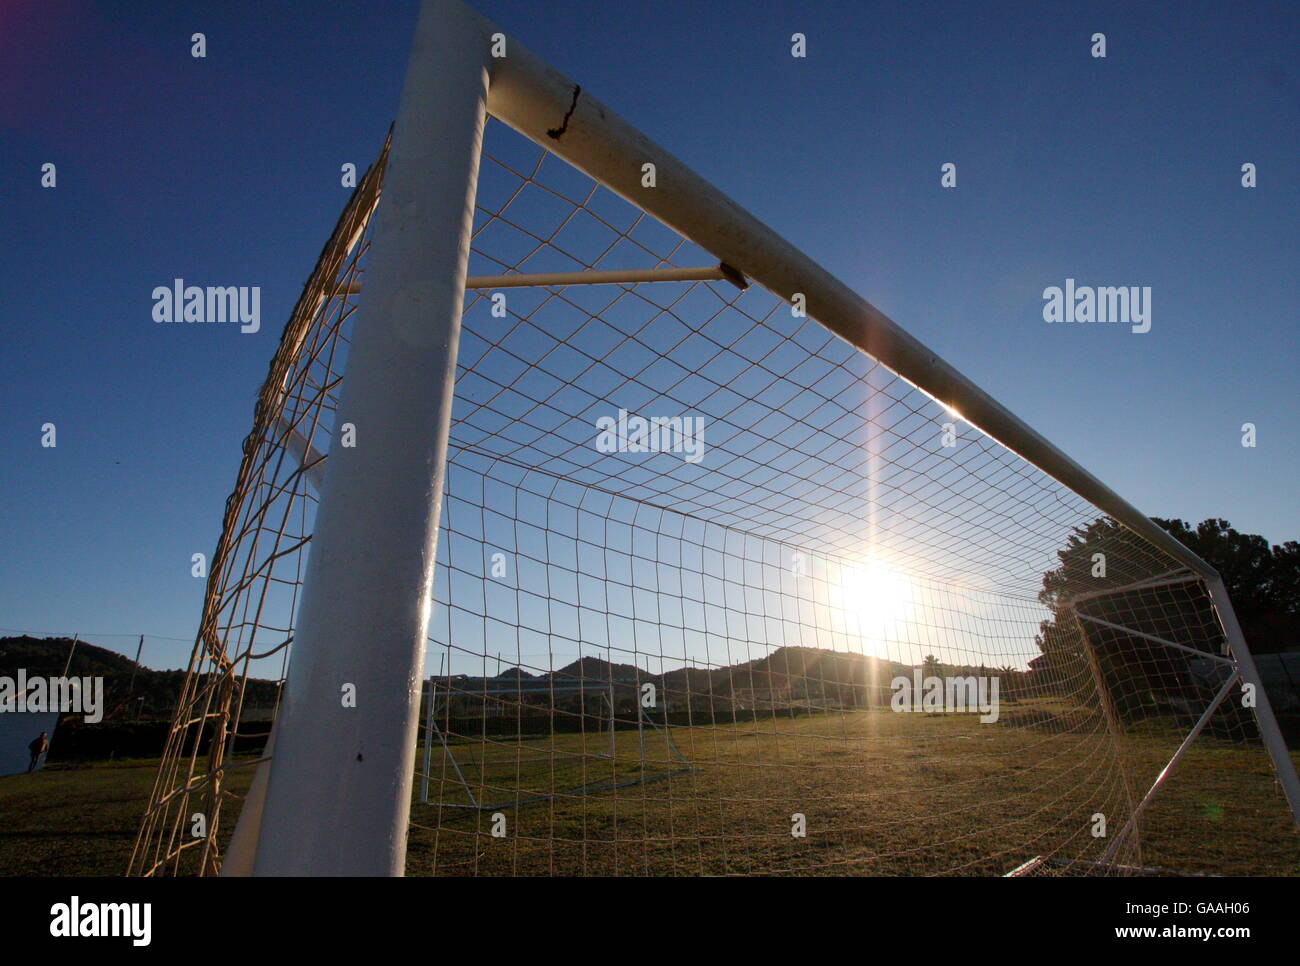 Soccer training on a sunny evening Stock Photo